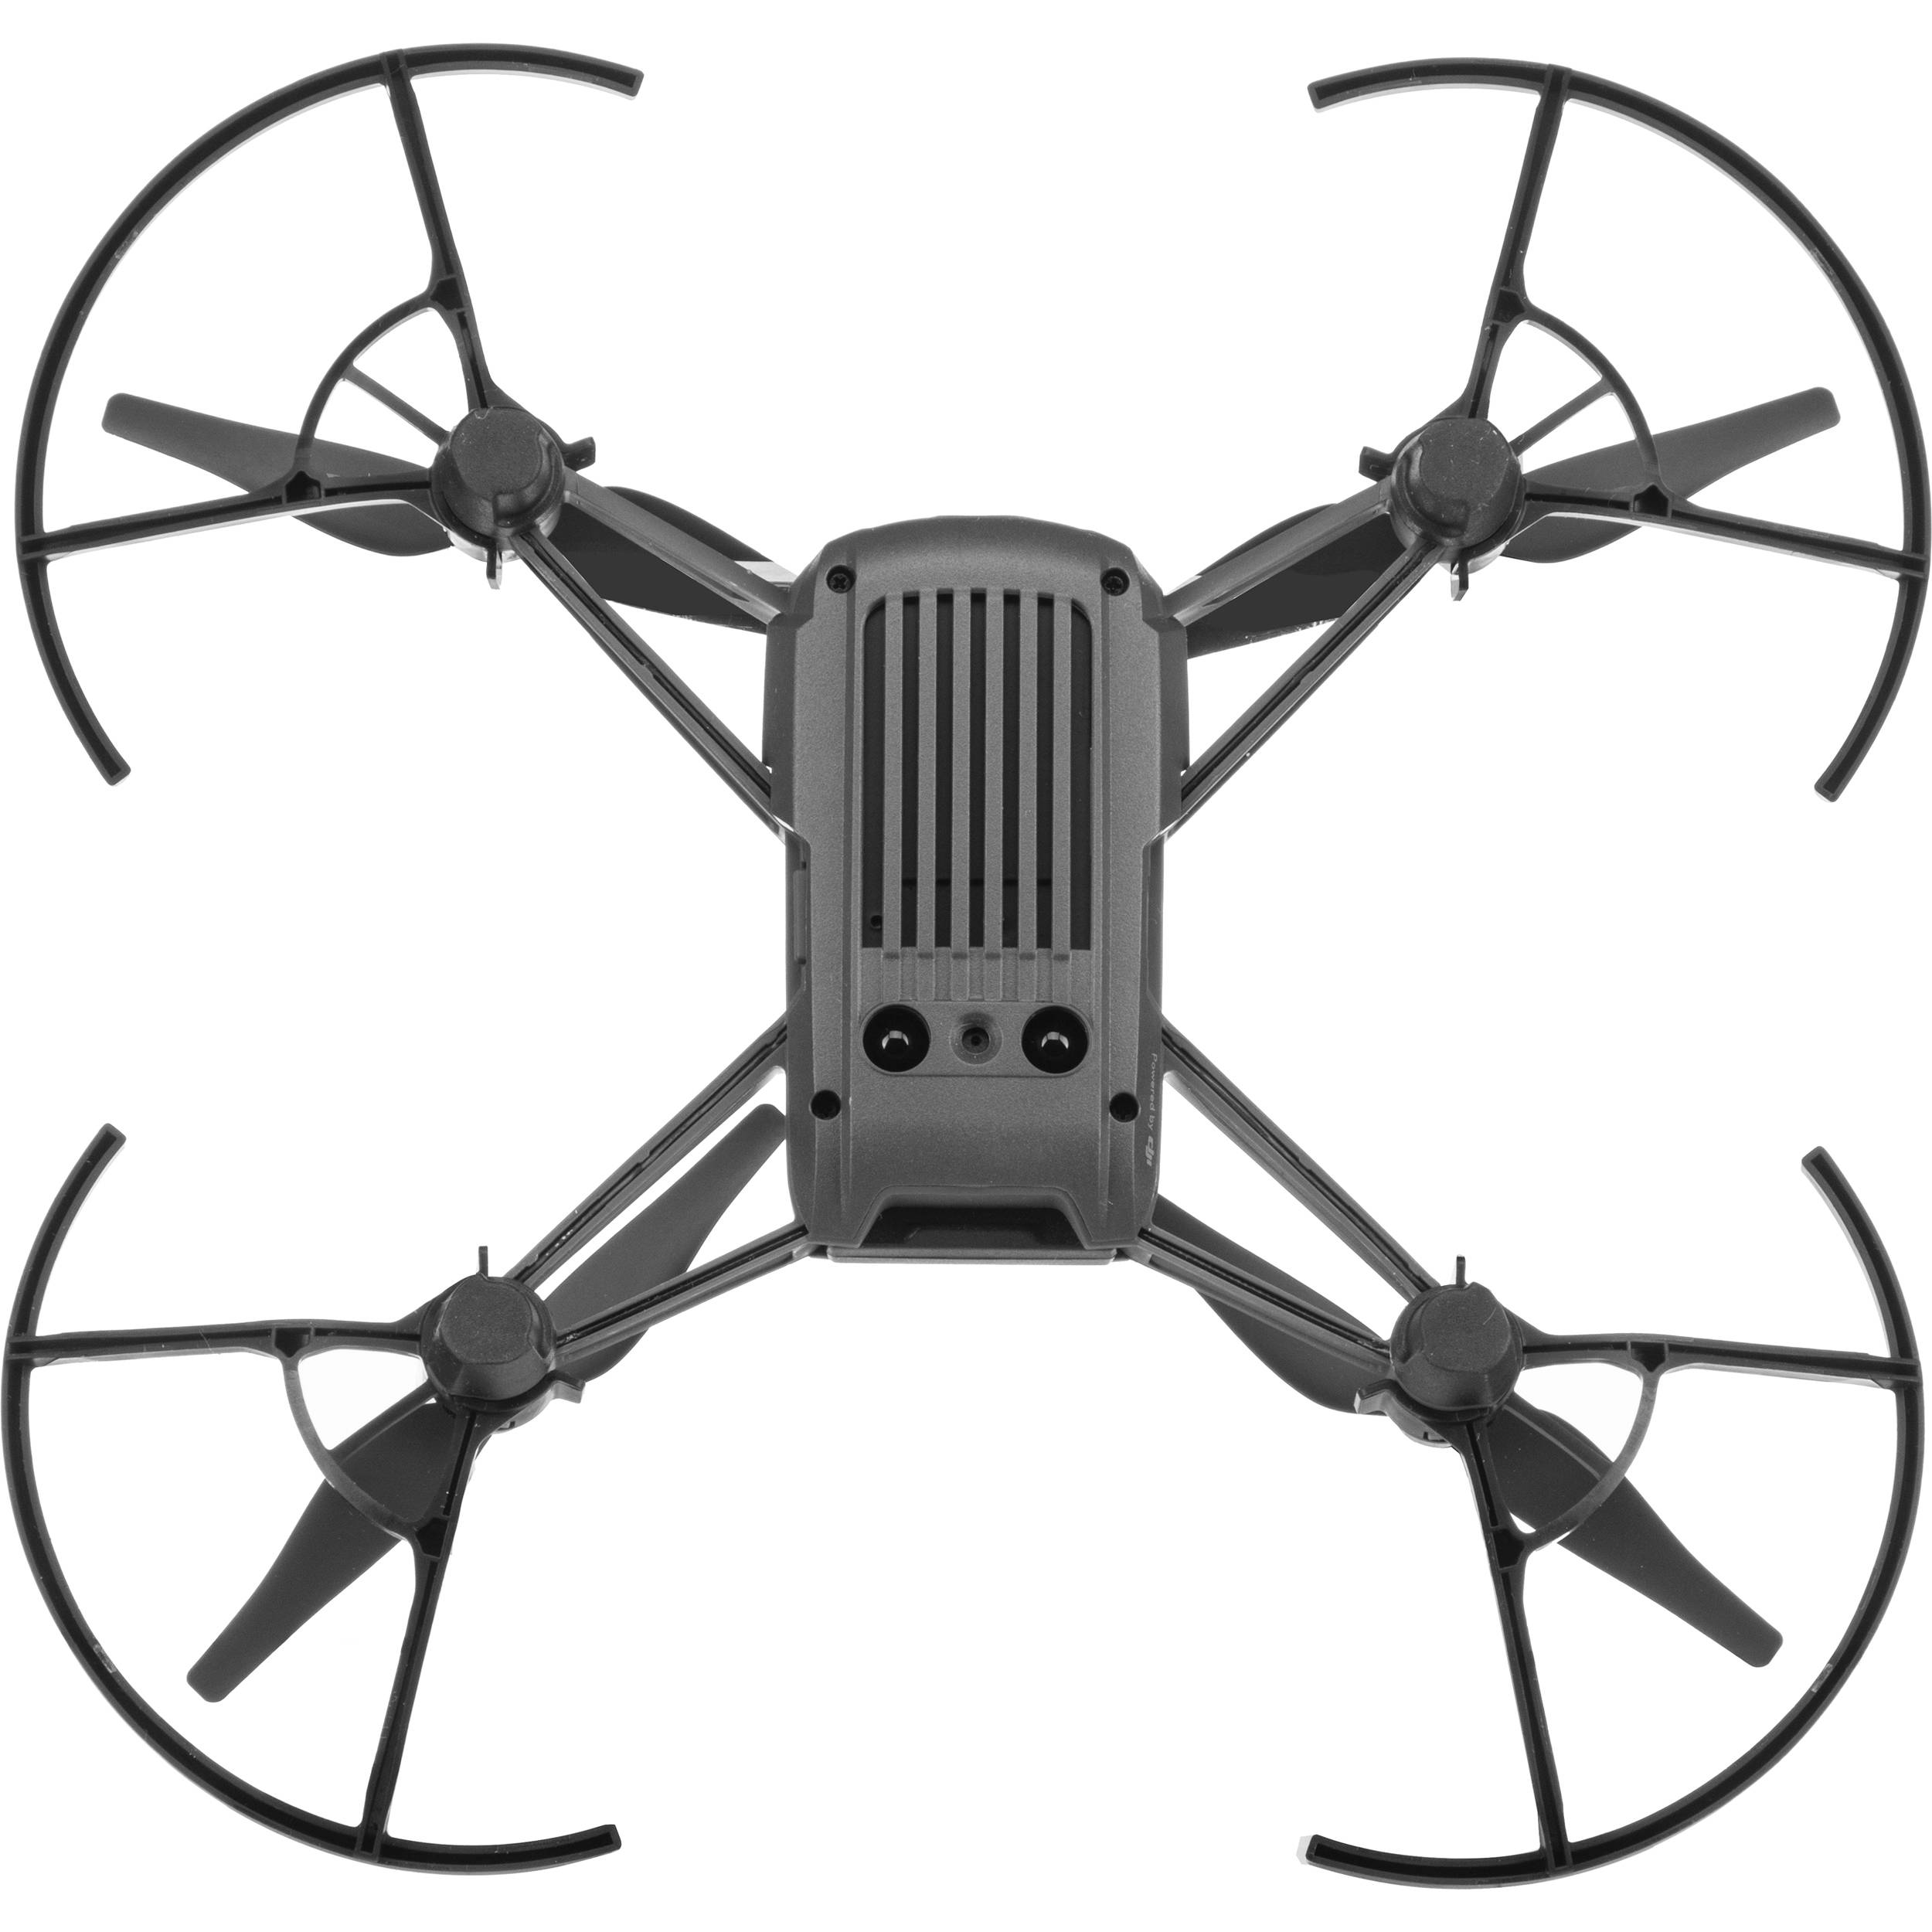 Ryze Tech Tello Quadcopter by DJI CP.TL.00000041.01 190021310568